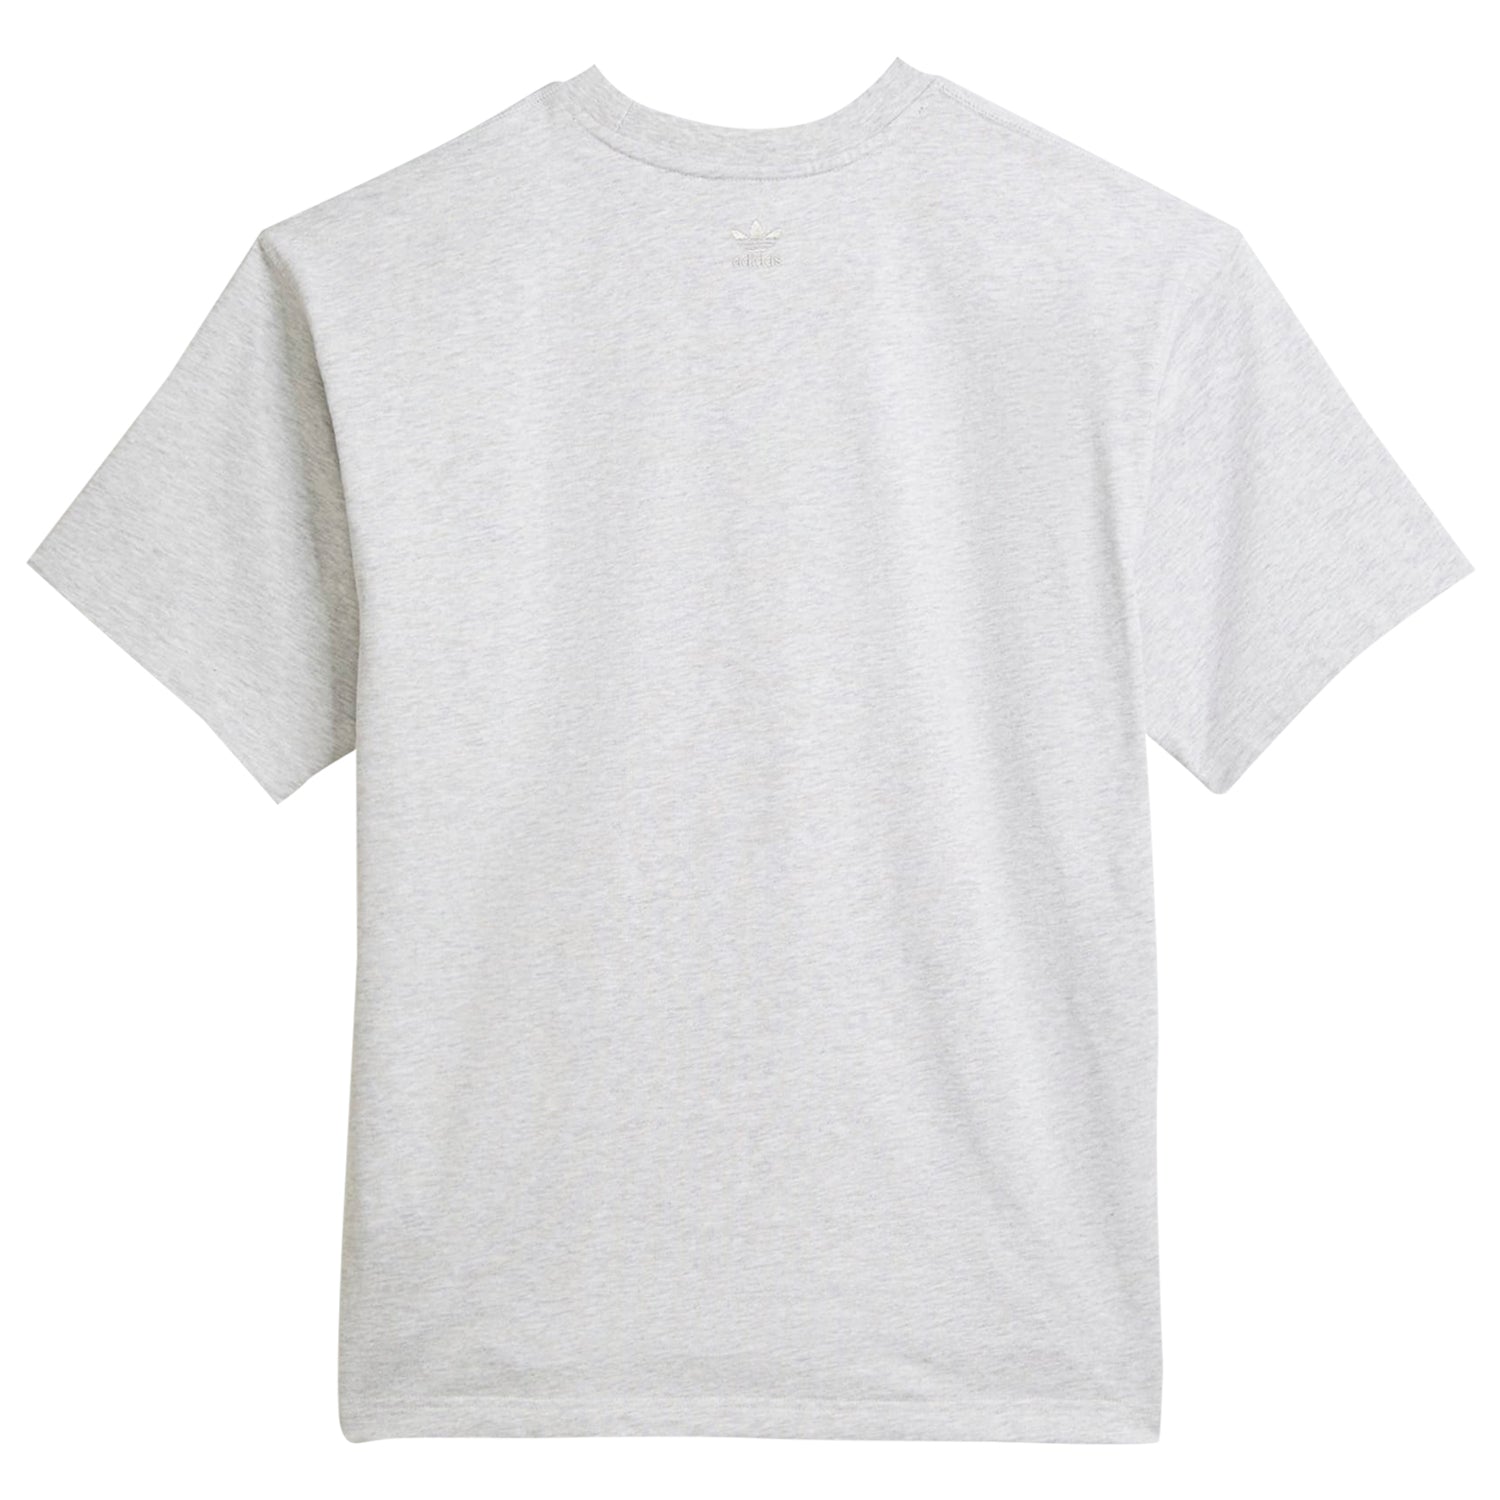 Adidas Pharrell Williams Basics Shirt Mens Style : Hb8818